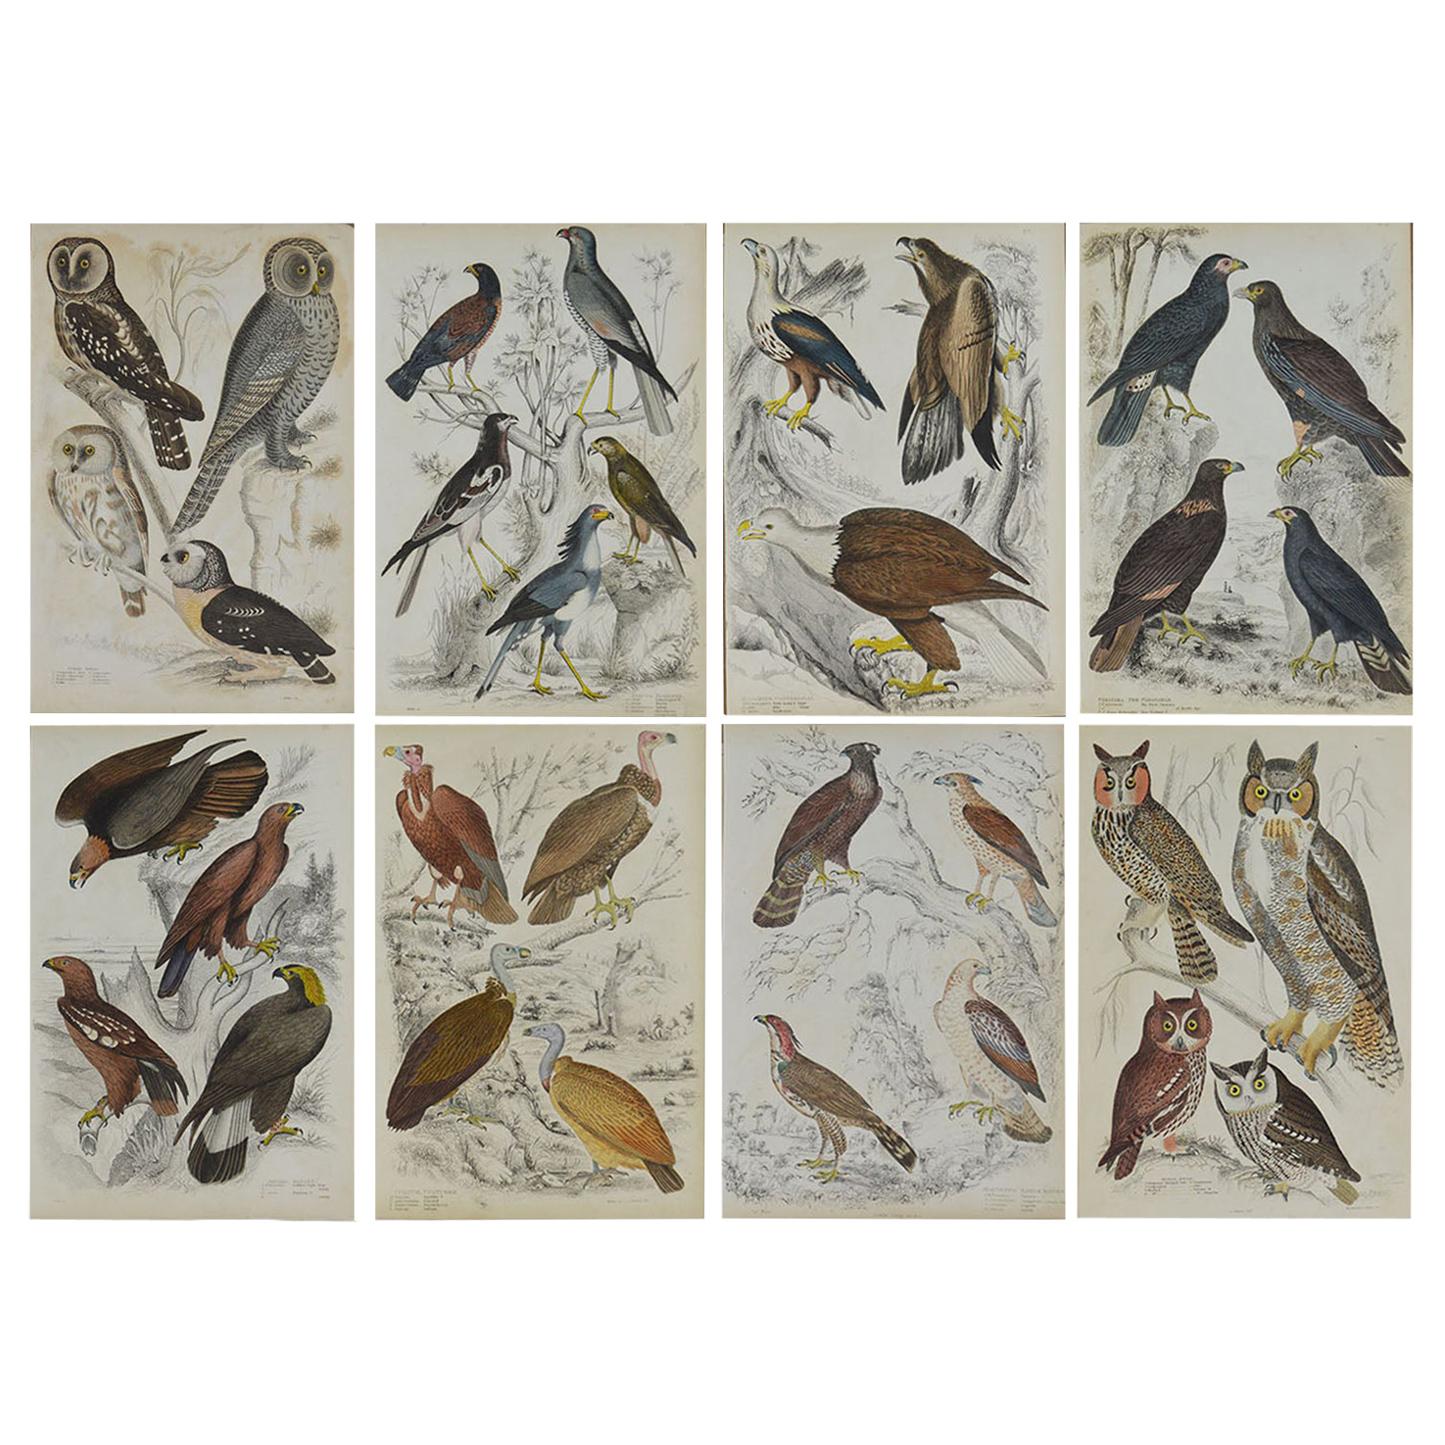 Set of 8 Original Antique Prints of Birds of Prey, 1830s